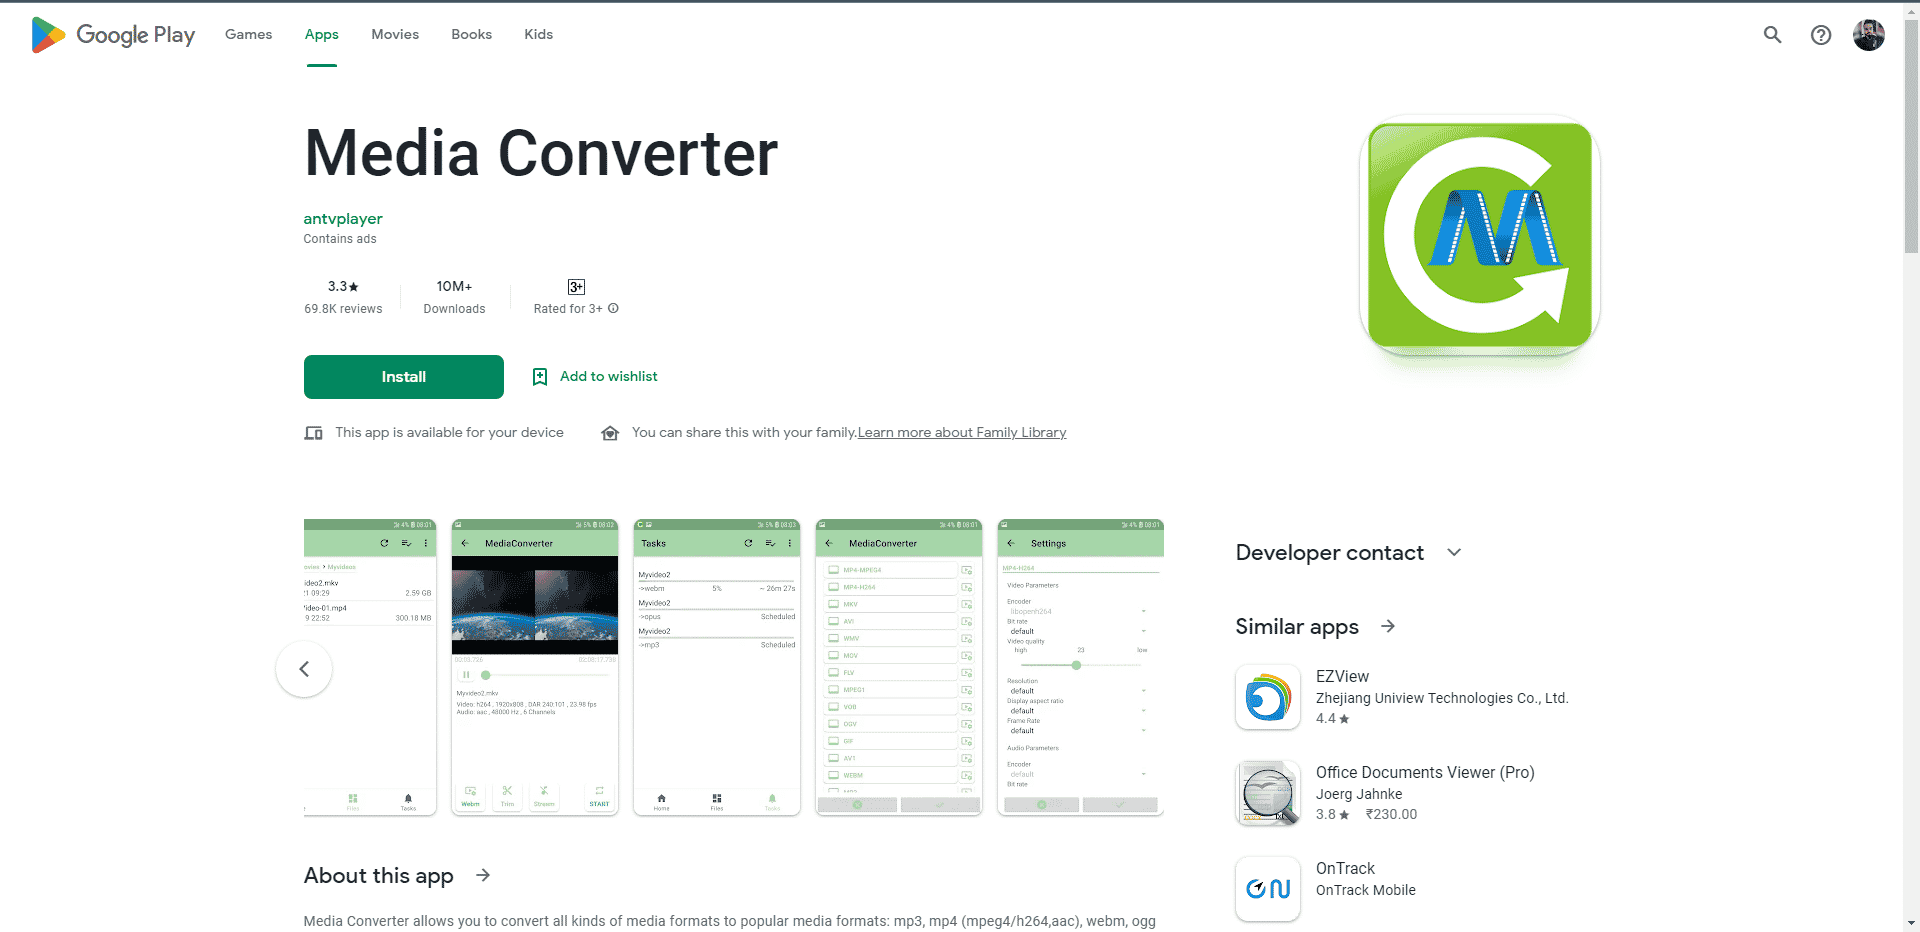 Media Converter Play Store webpage